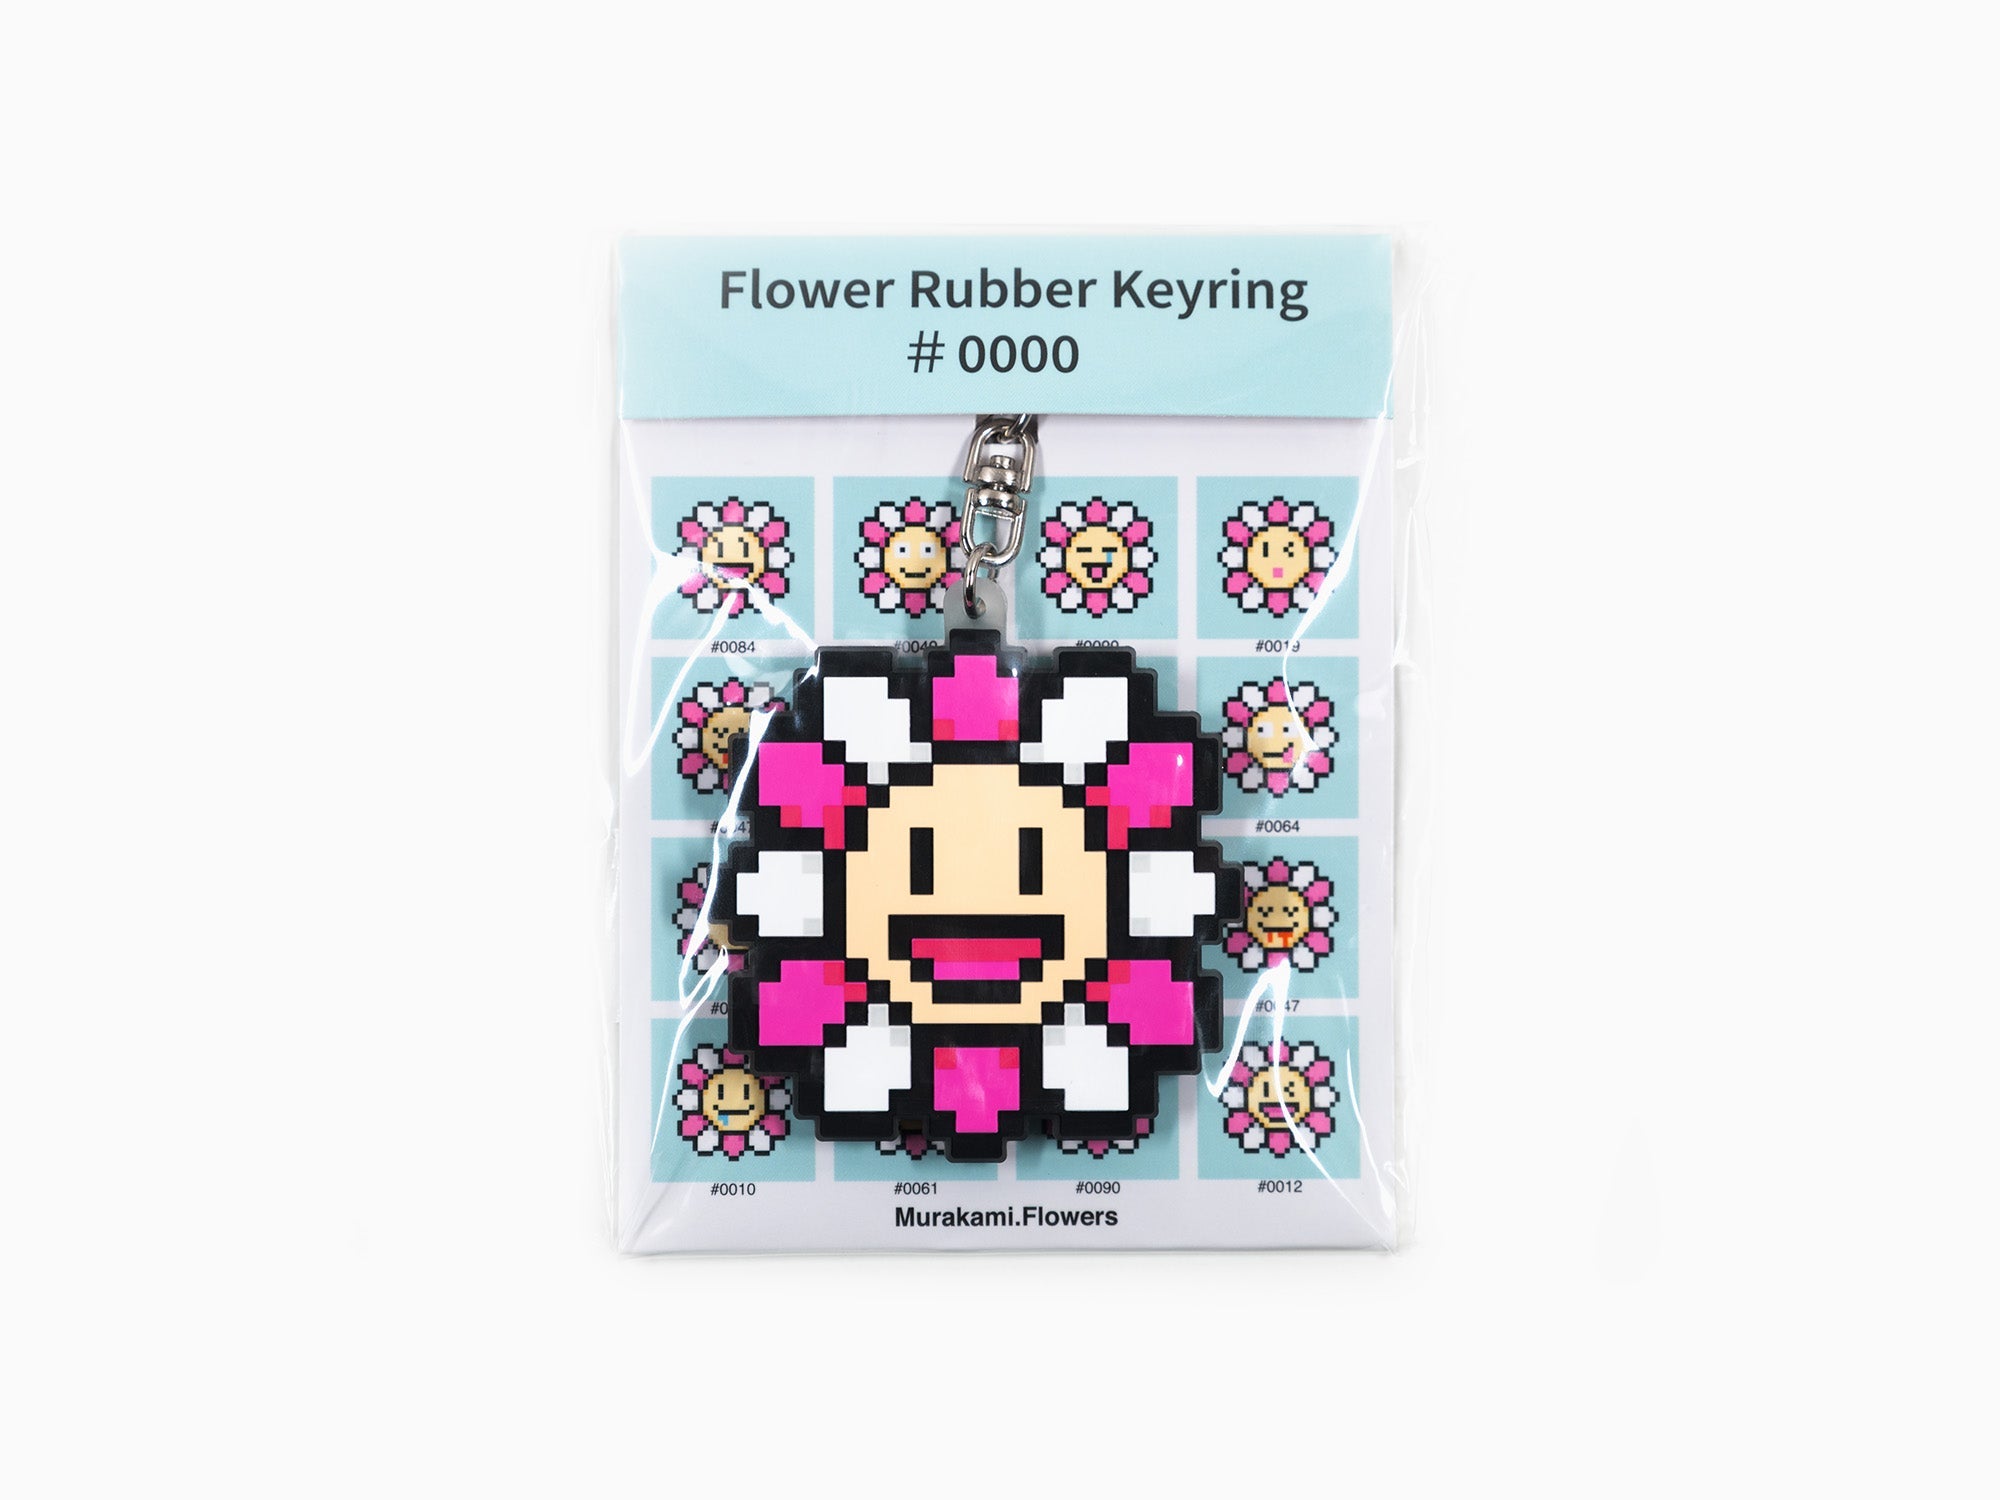 Takashi Murakami - Flowers Flower Rubber Keyring #0000